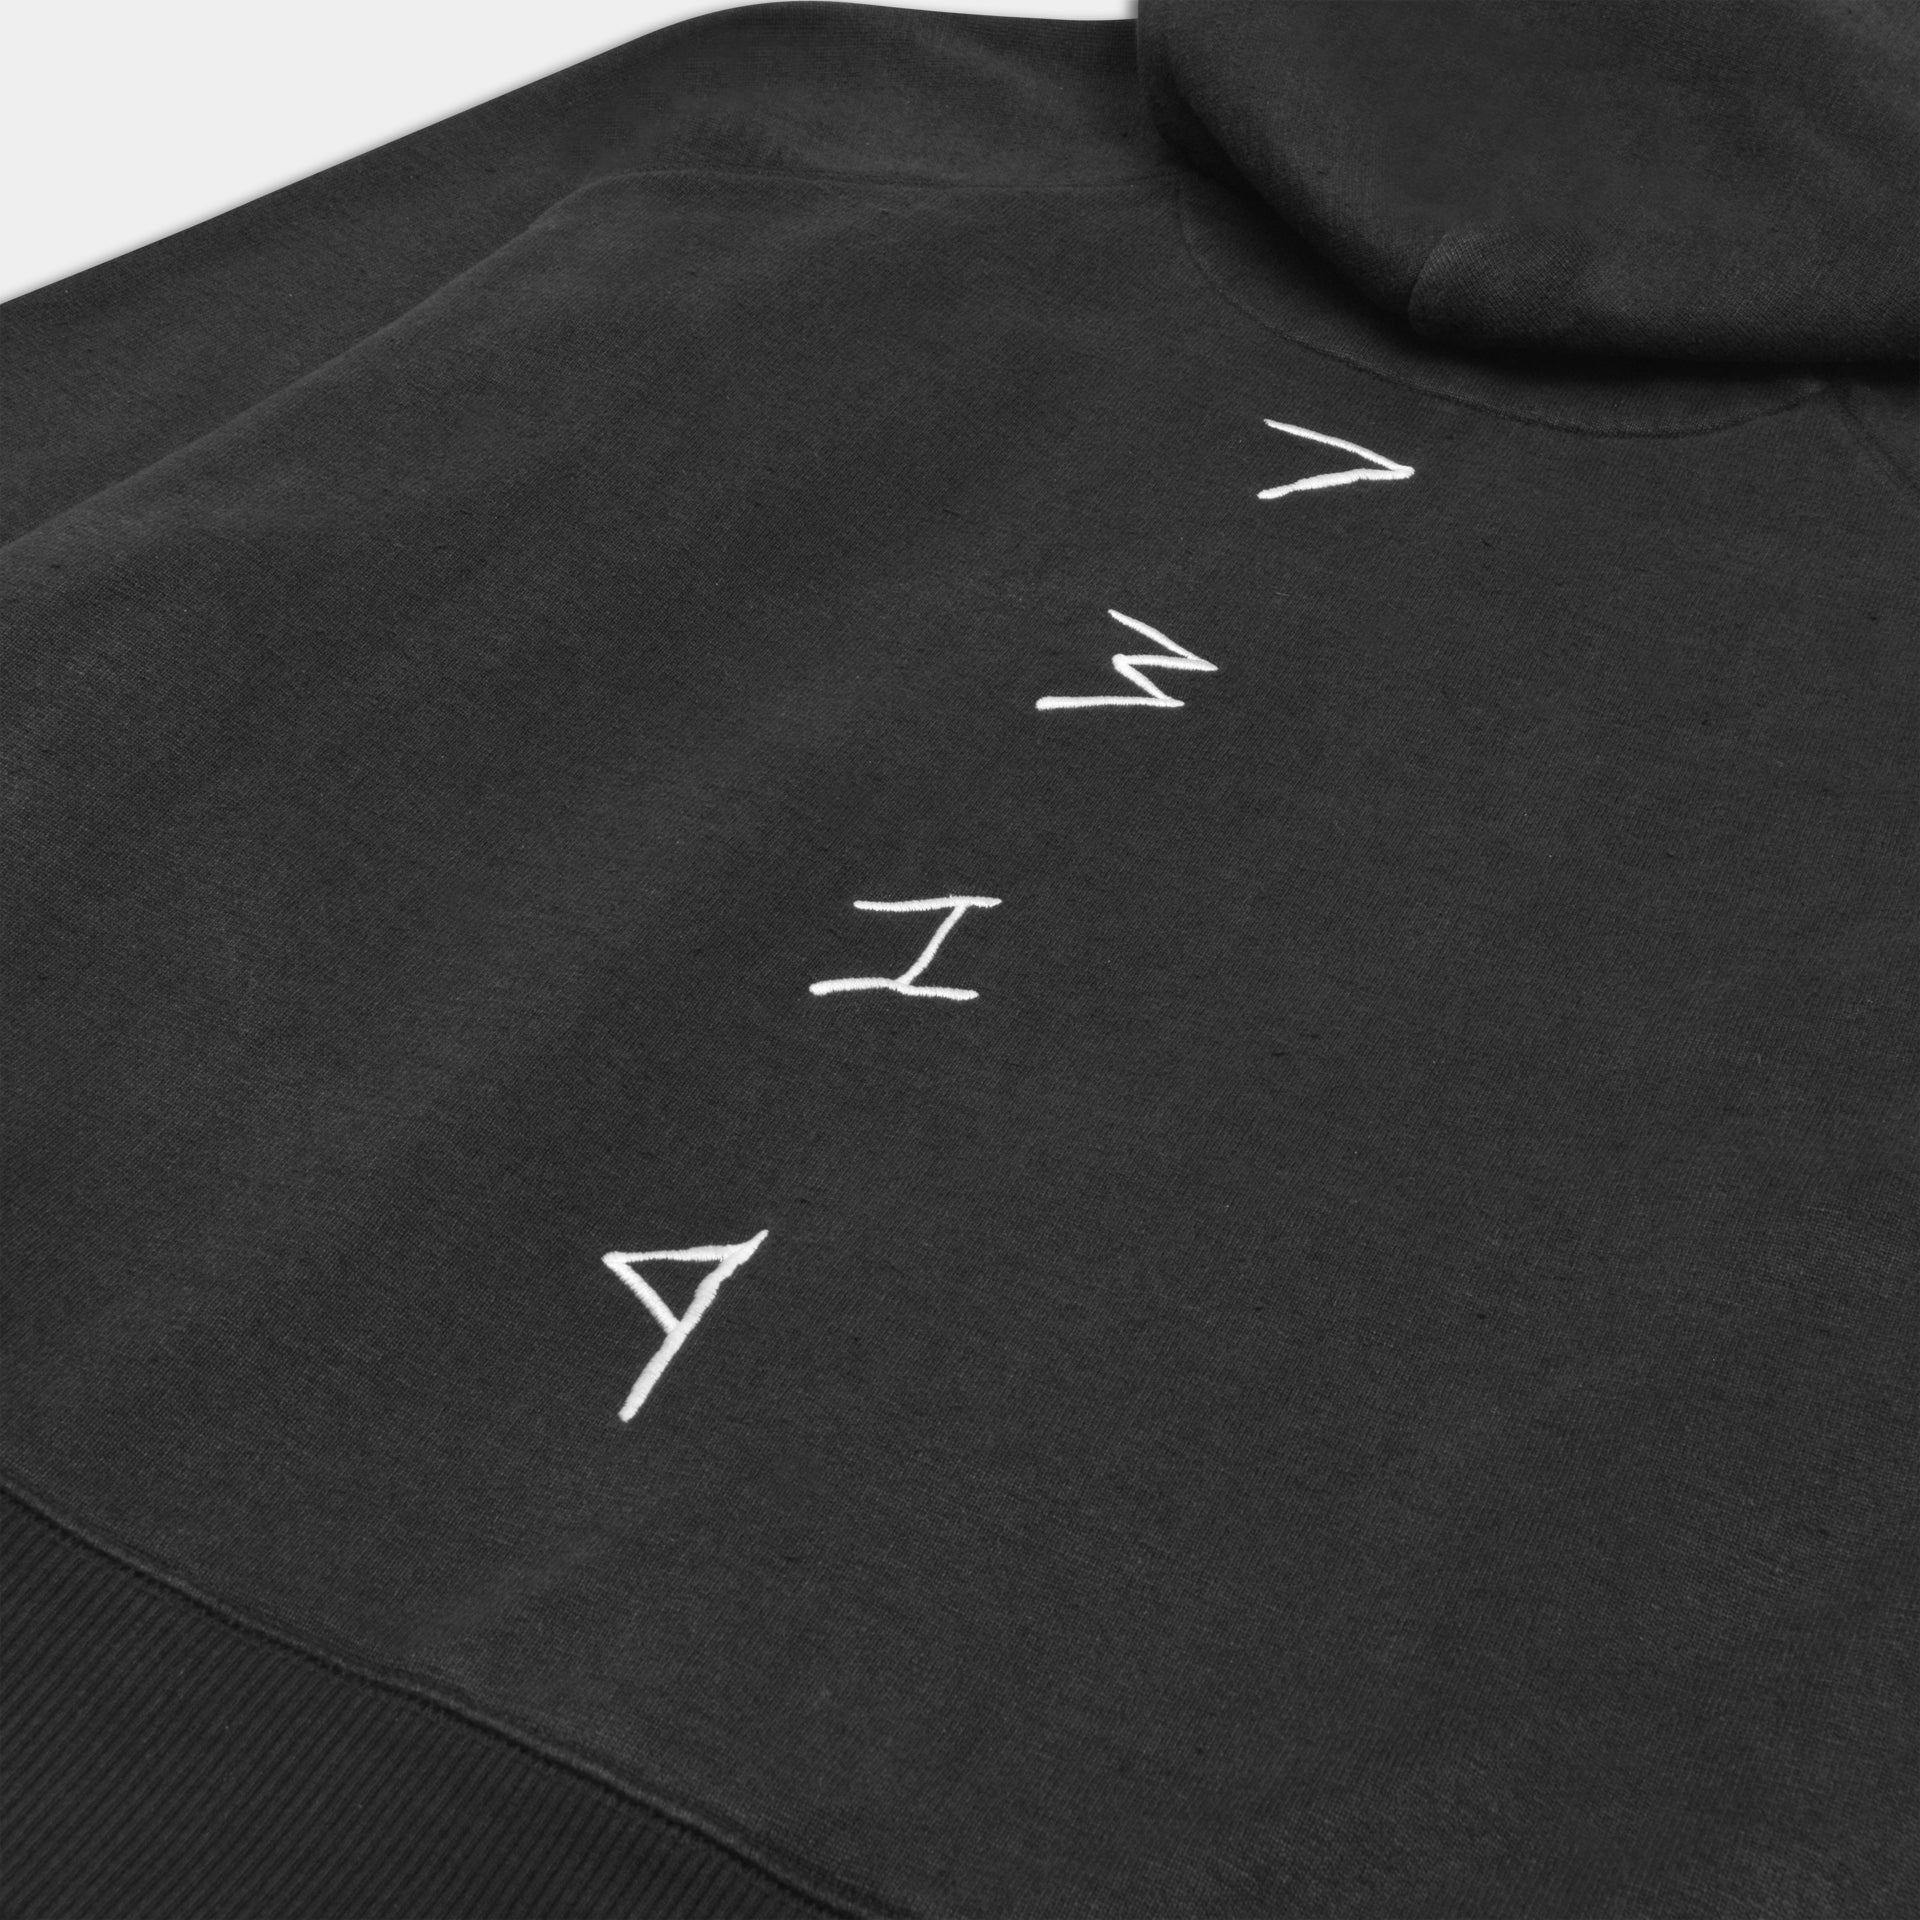 black hemp hoodie. Close up shot of white embroidered 7319 detailing down spine. Hemp active wear. Conscious zero waste fashion.